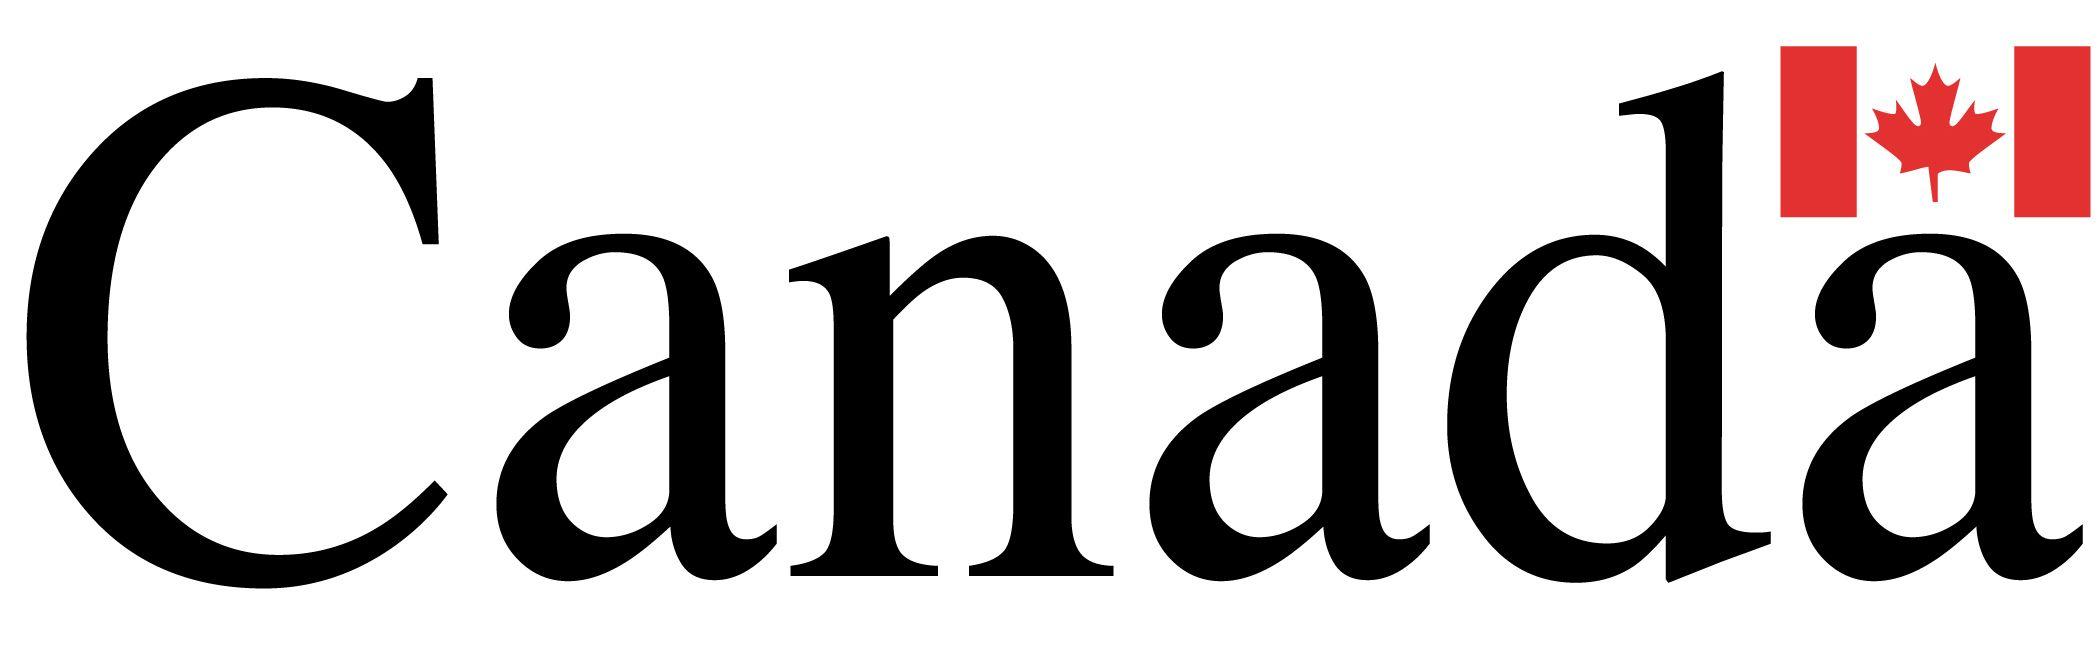 Canada Credits Logo - Disney's Dog vs. Eagle/Credits | Idea Wiki | FANDOM powered by Wikia